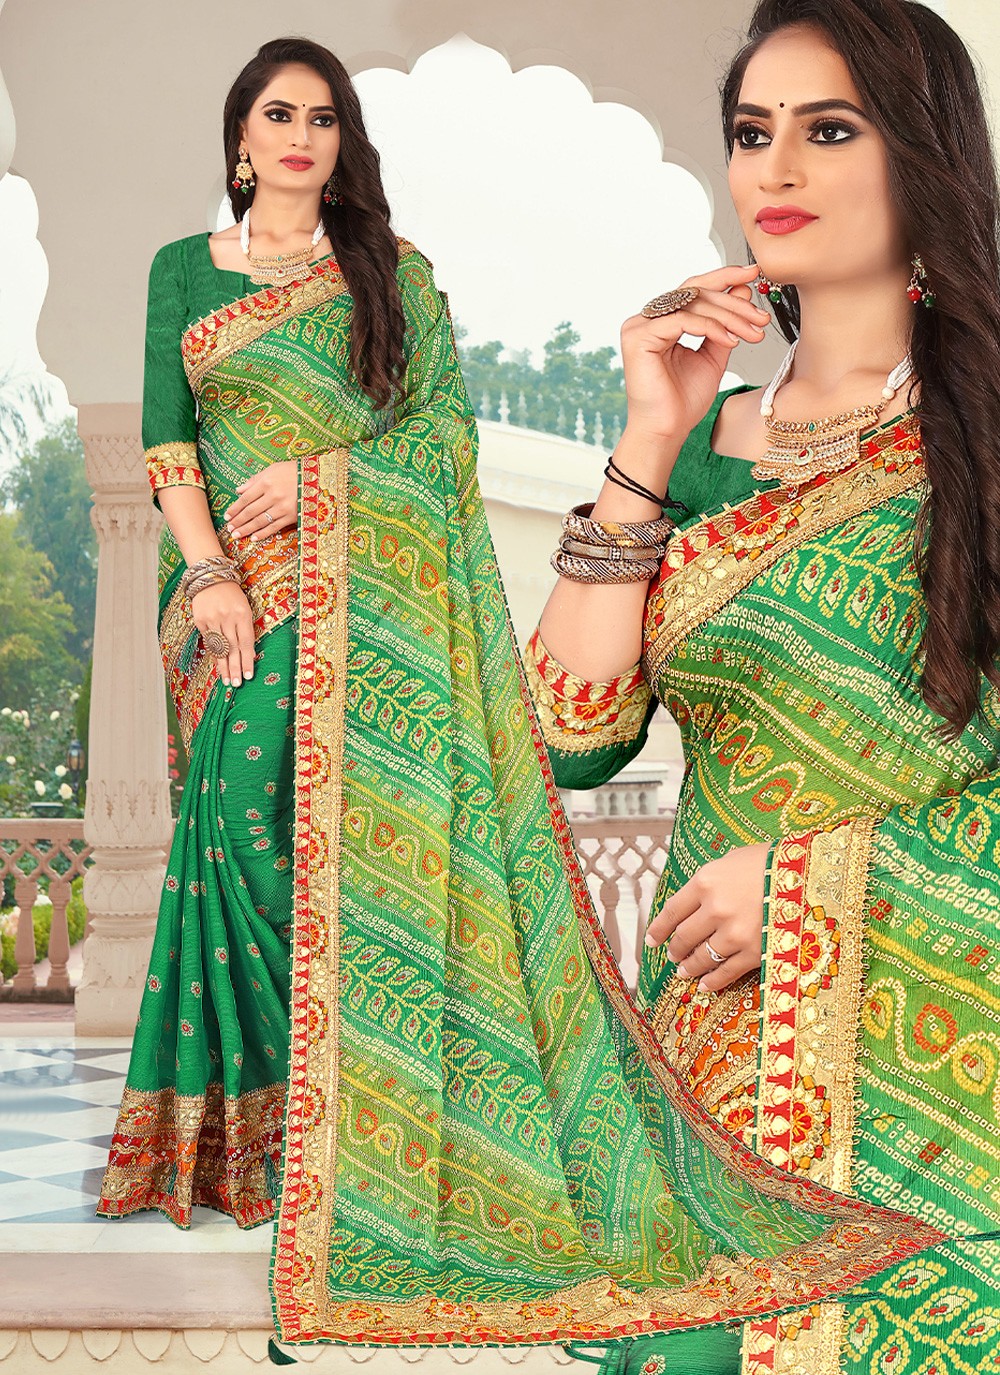 Kajol In A Black Sari | Designer saree blouse patterns, Bandhani saree,  Saree designs